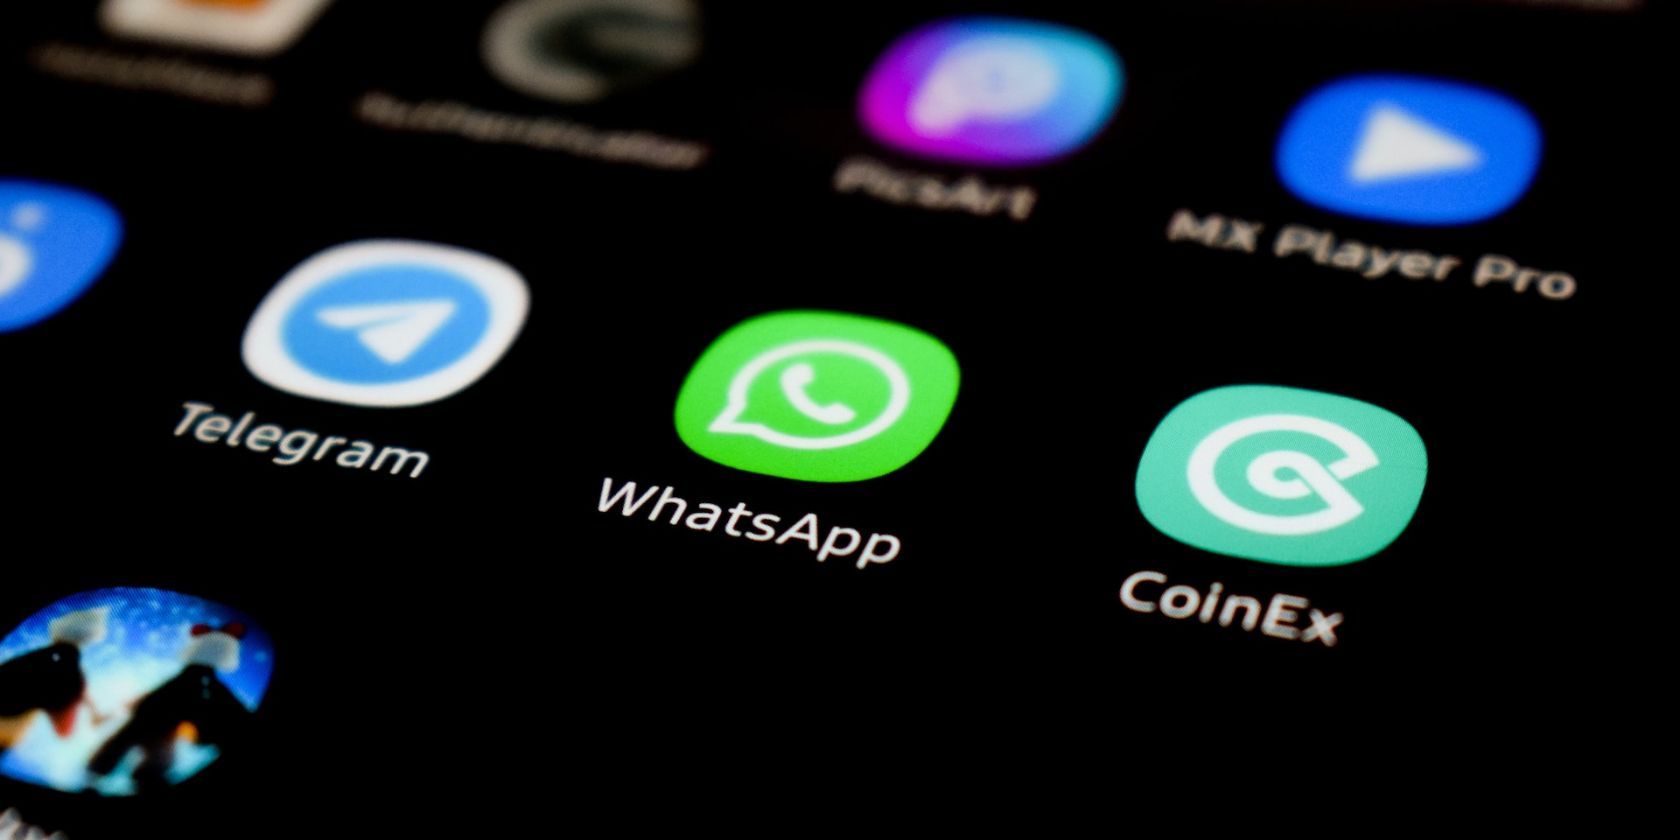 WhatsApp app logo on mobile